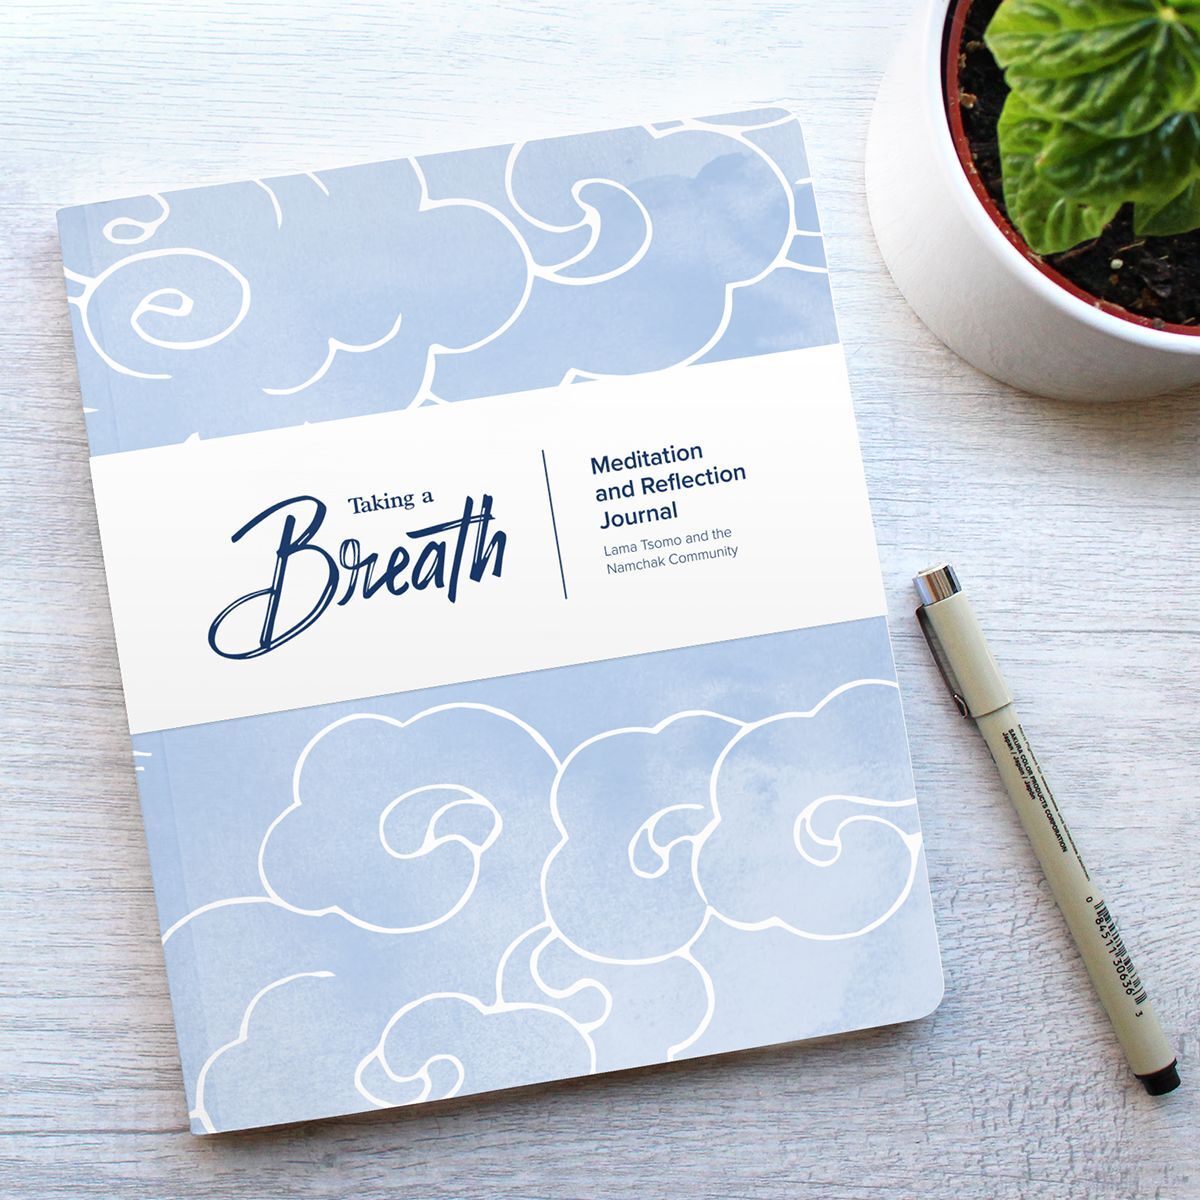 Taking a Breath Book